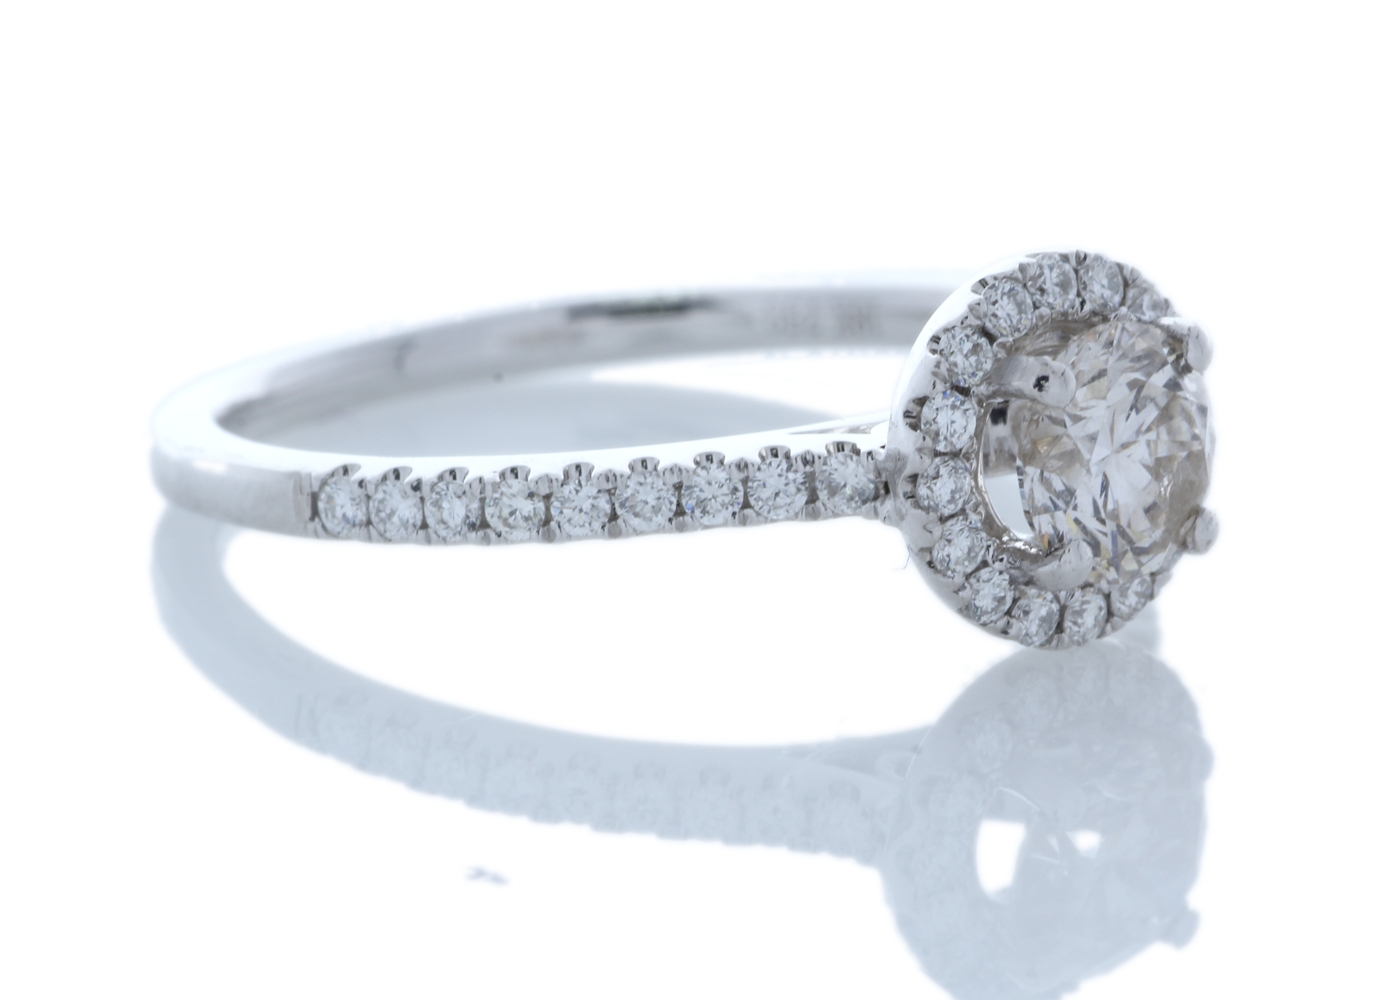 18ct White Gold Halo Set Diamond Ring 0.74 Carats - Image 5 of 6